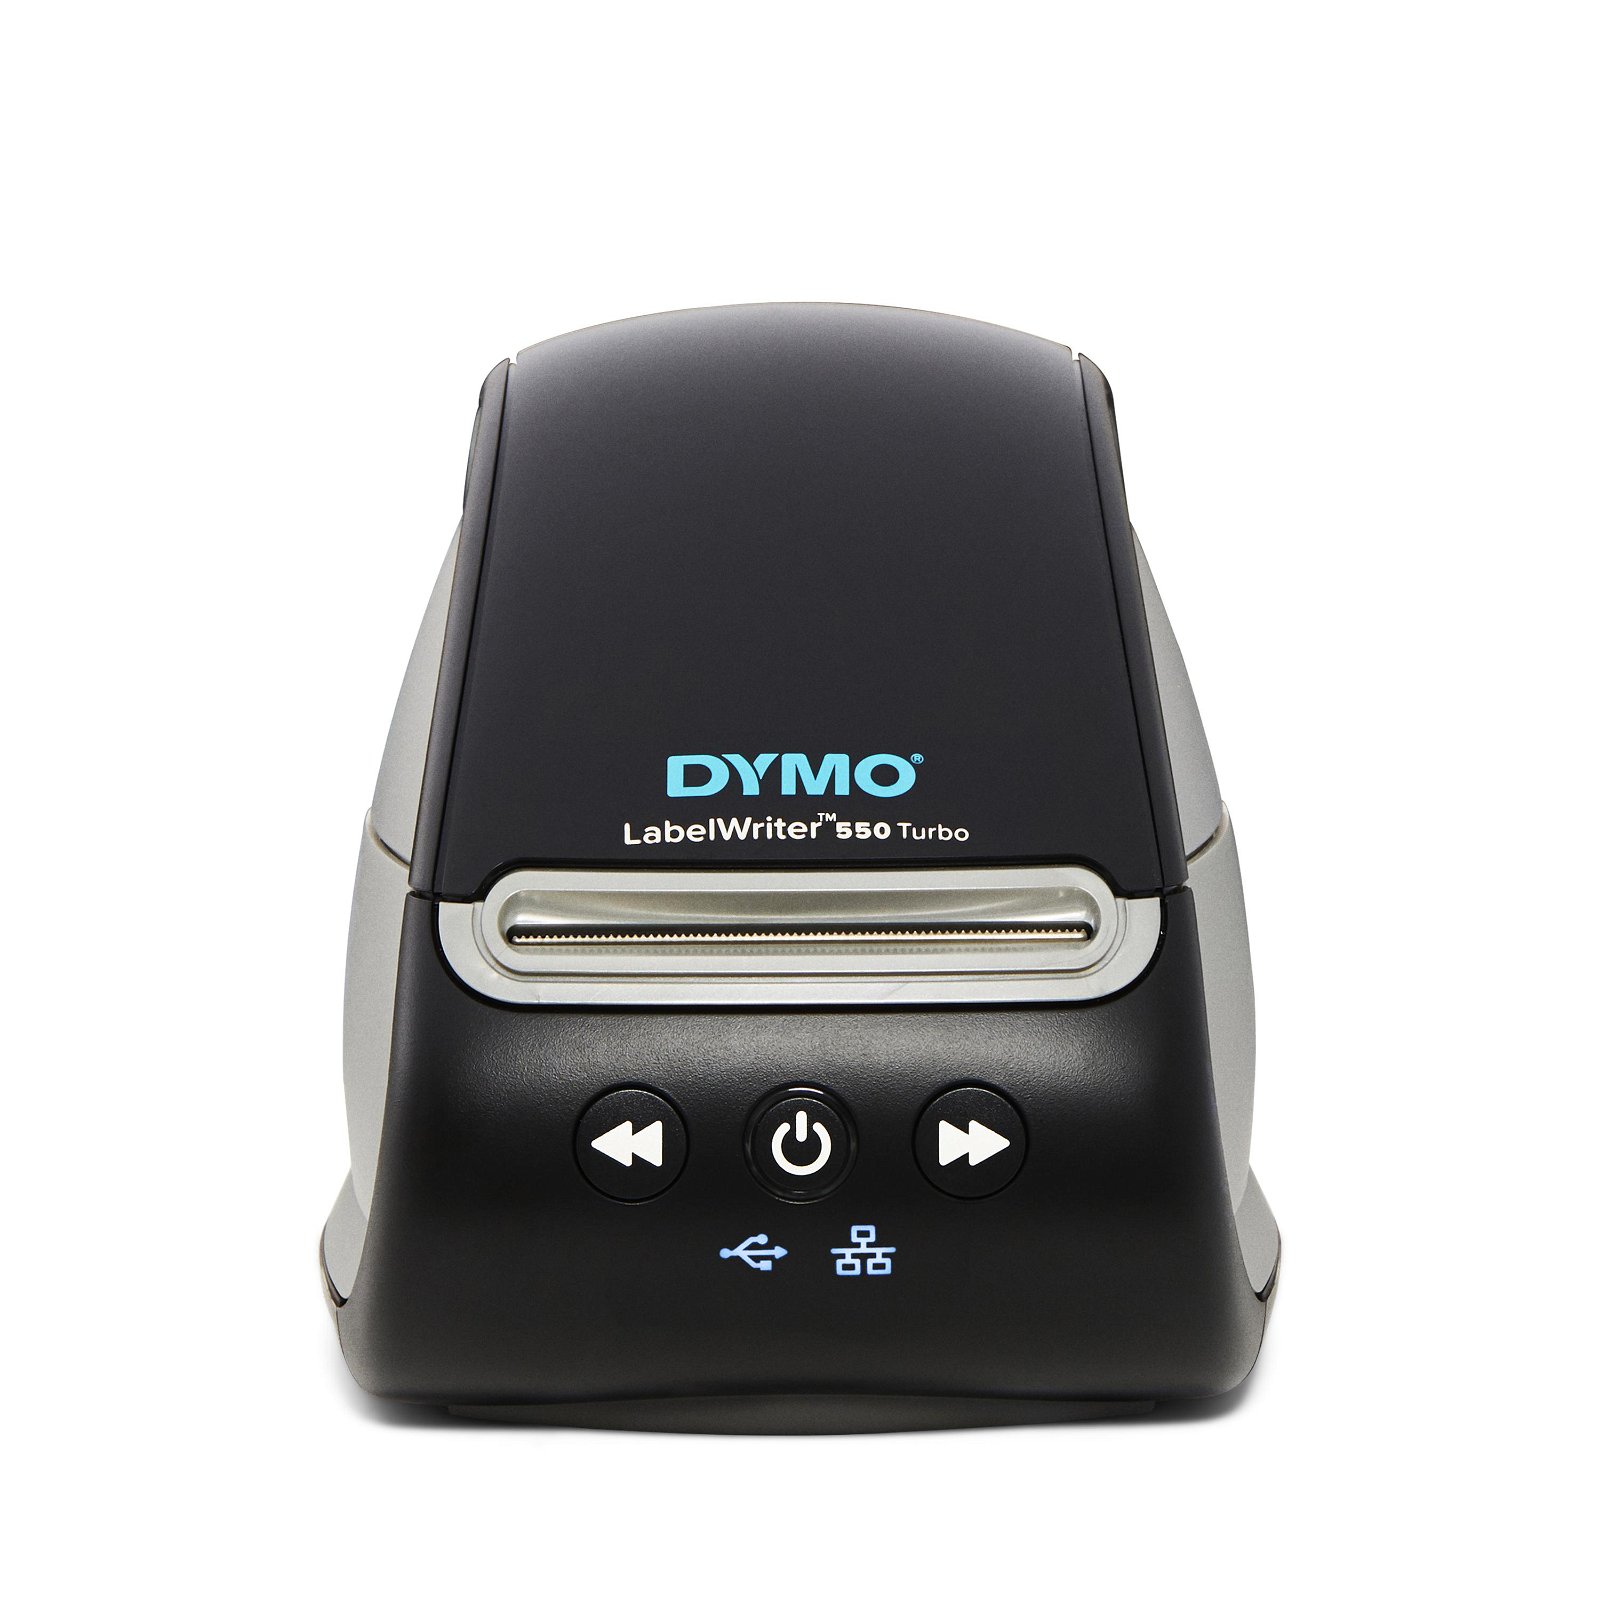 Dymo LabelWriter 550 Turbo labelprinter